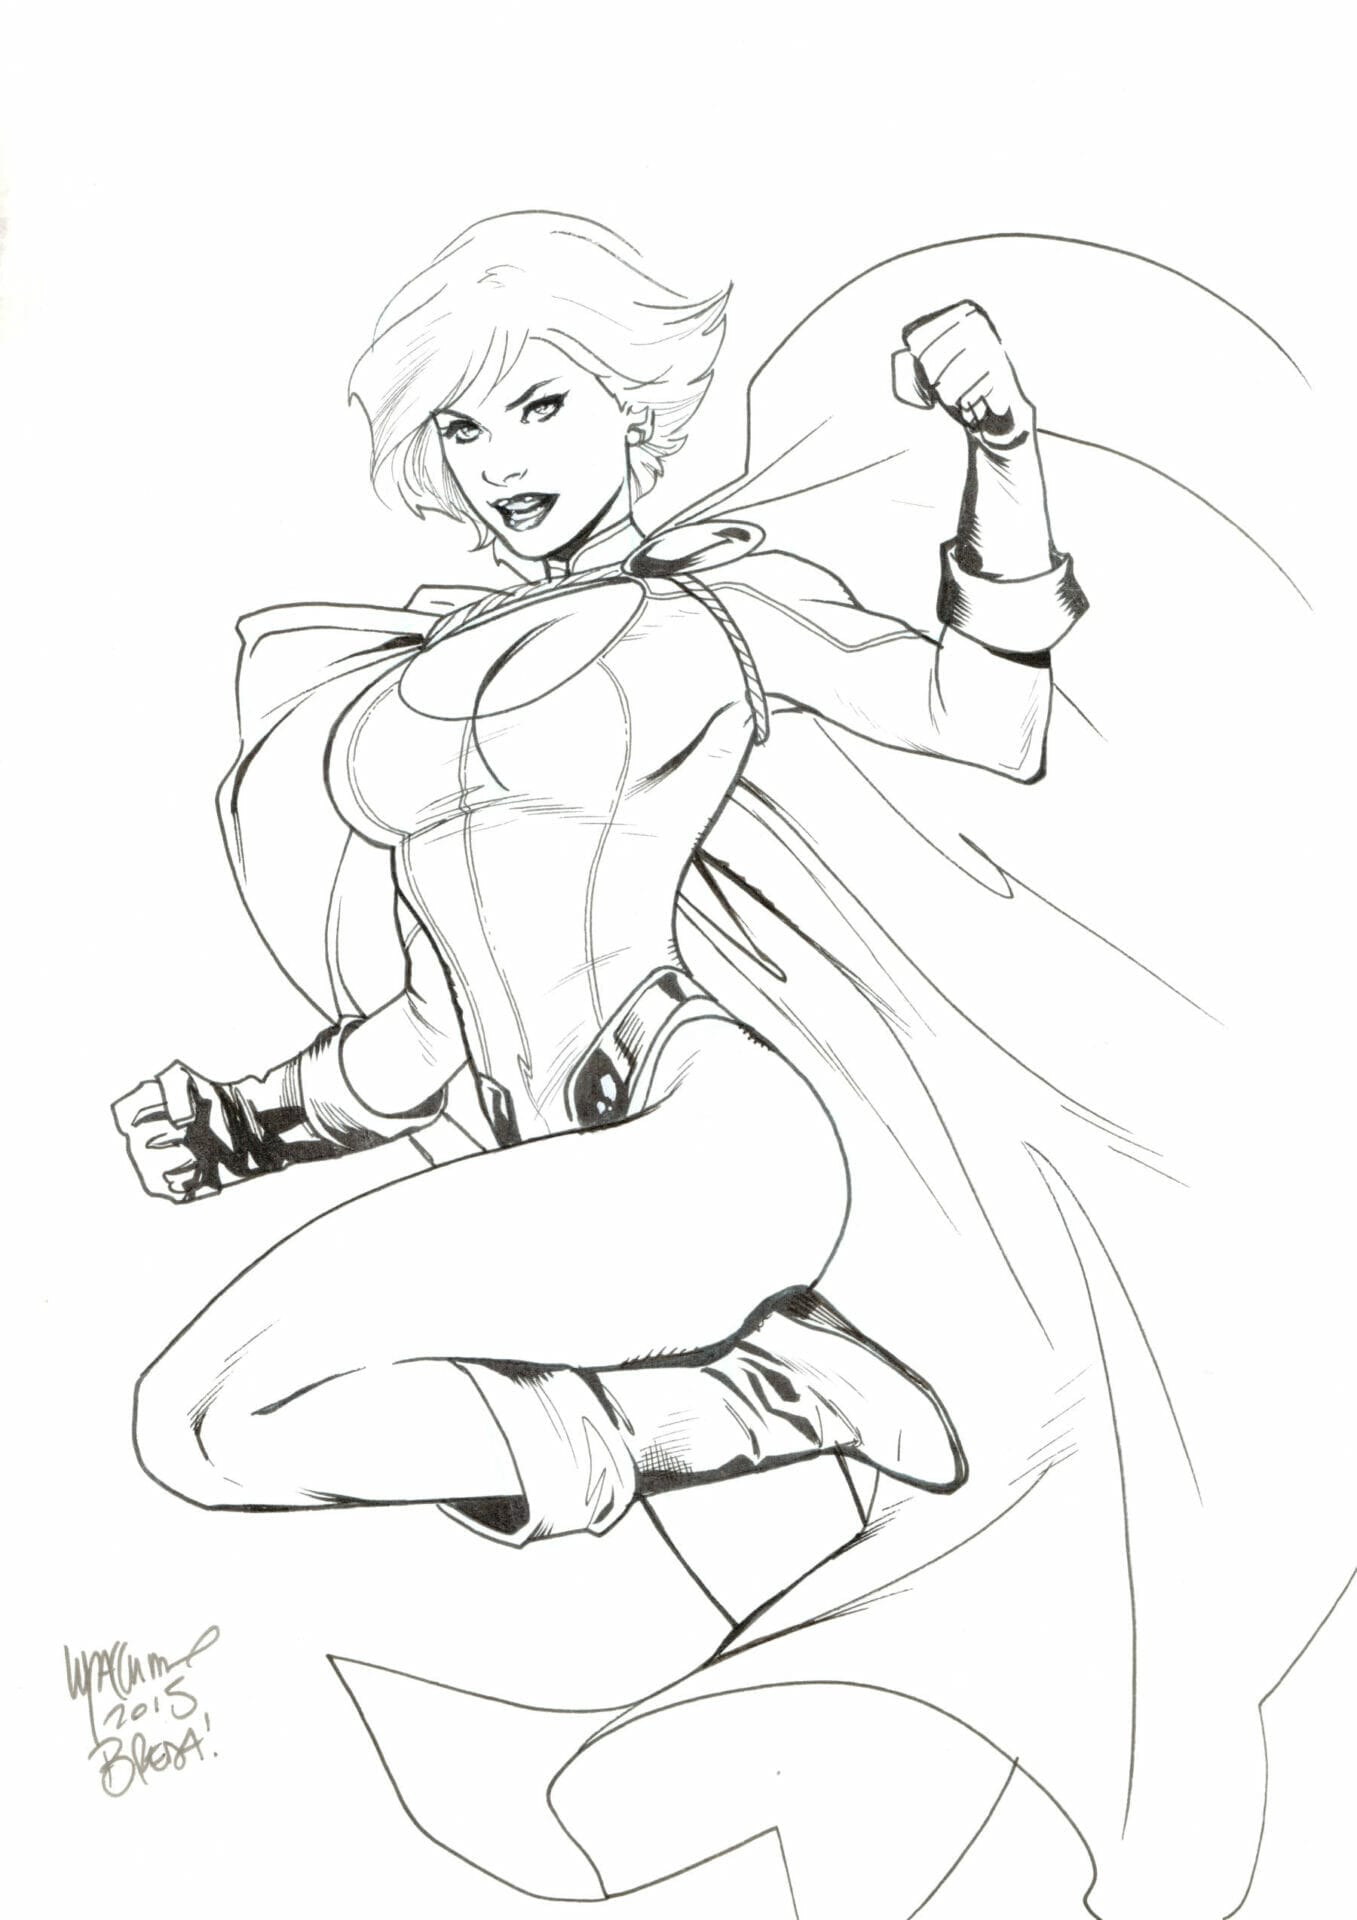 Power Girl sketch for DrawLAAHHH by SheldonGoh on DeviantArt